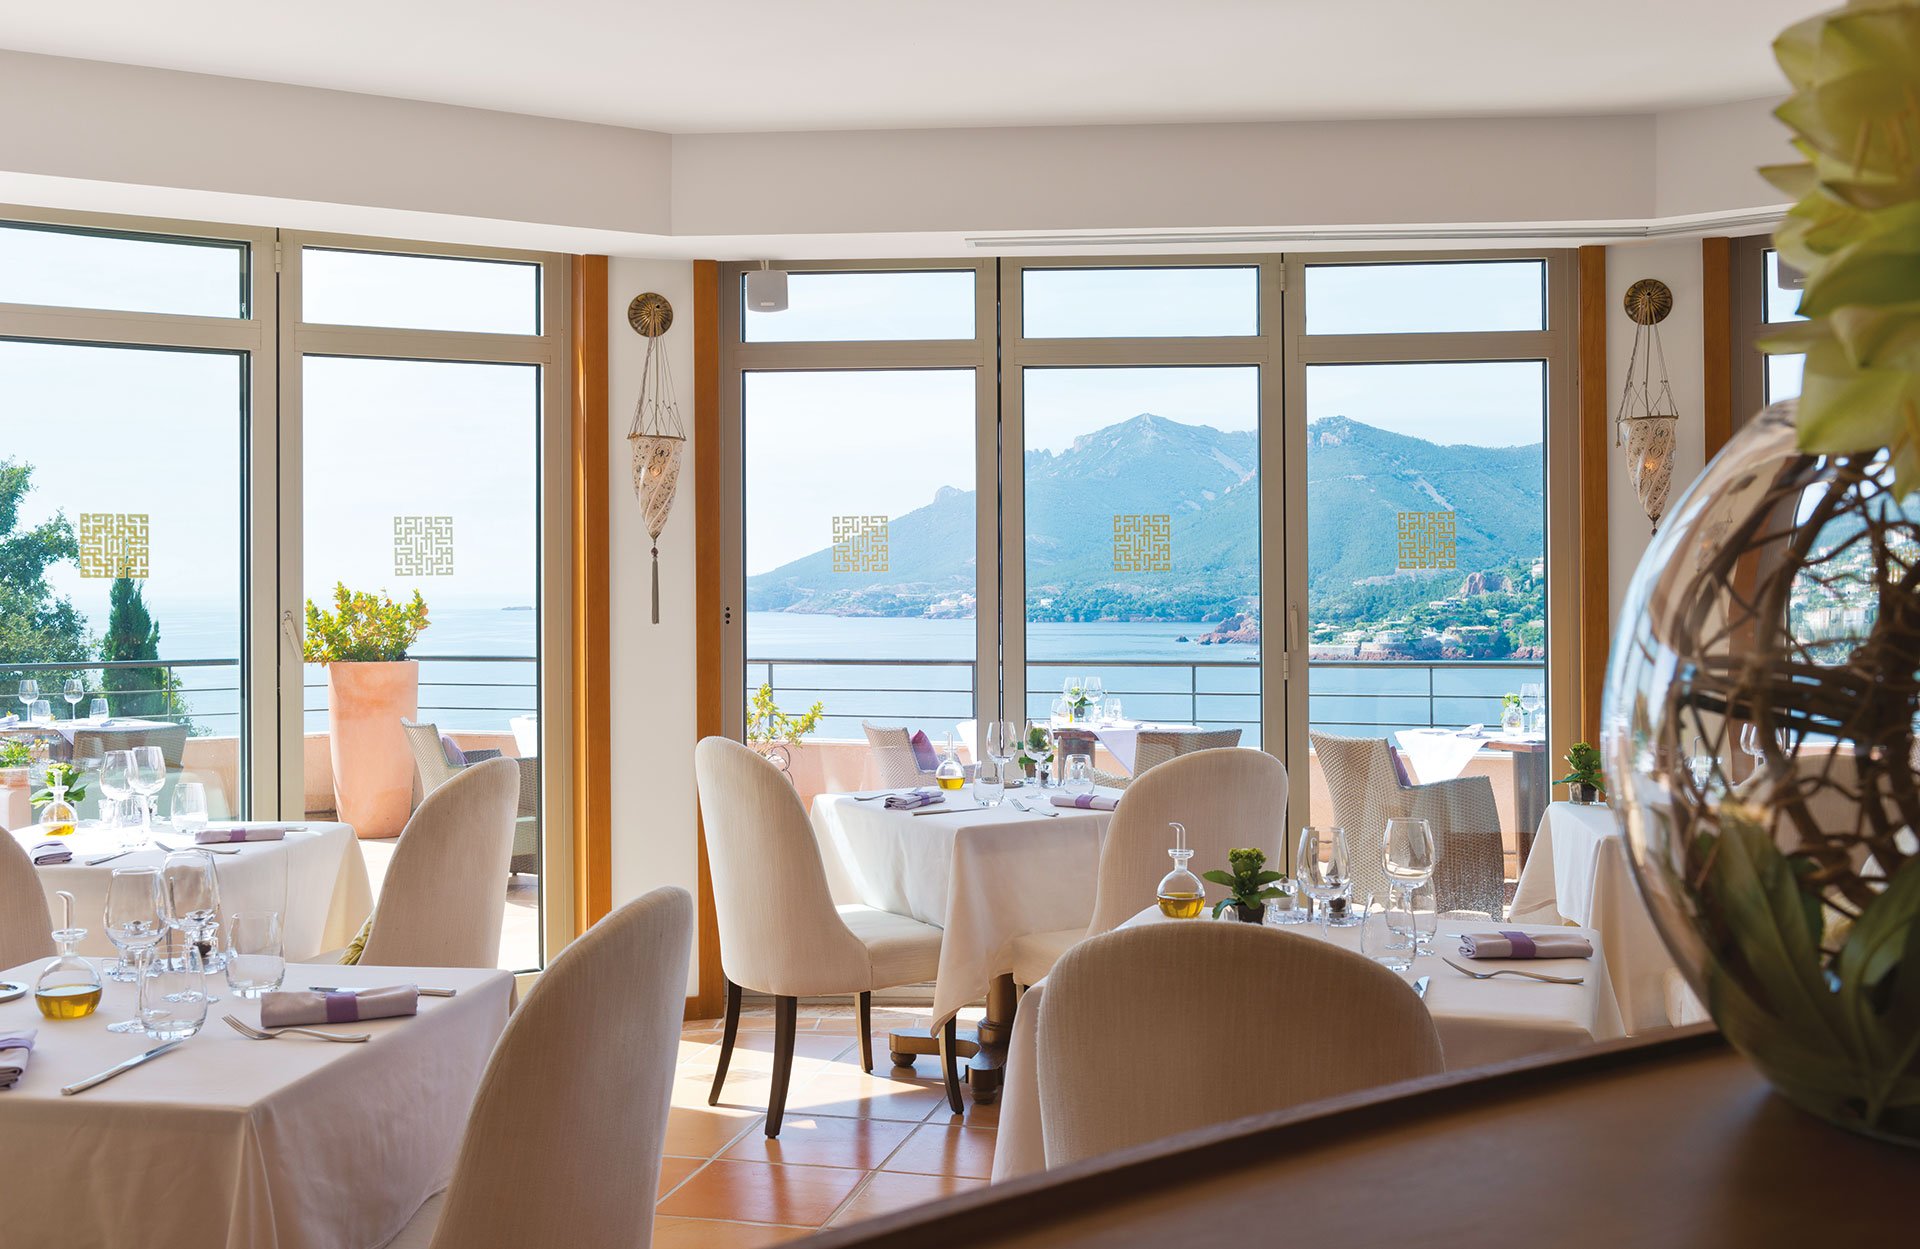 Tiara Yaktsa - Gastronomic Restaurant near Cannes